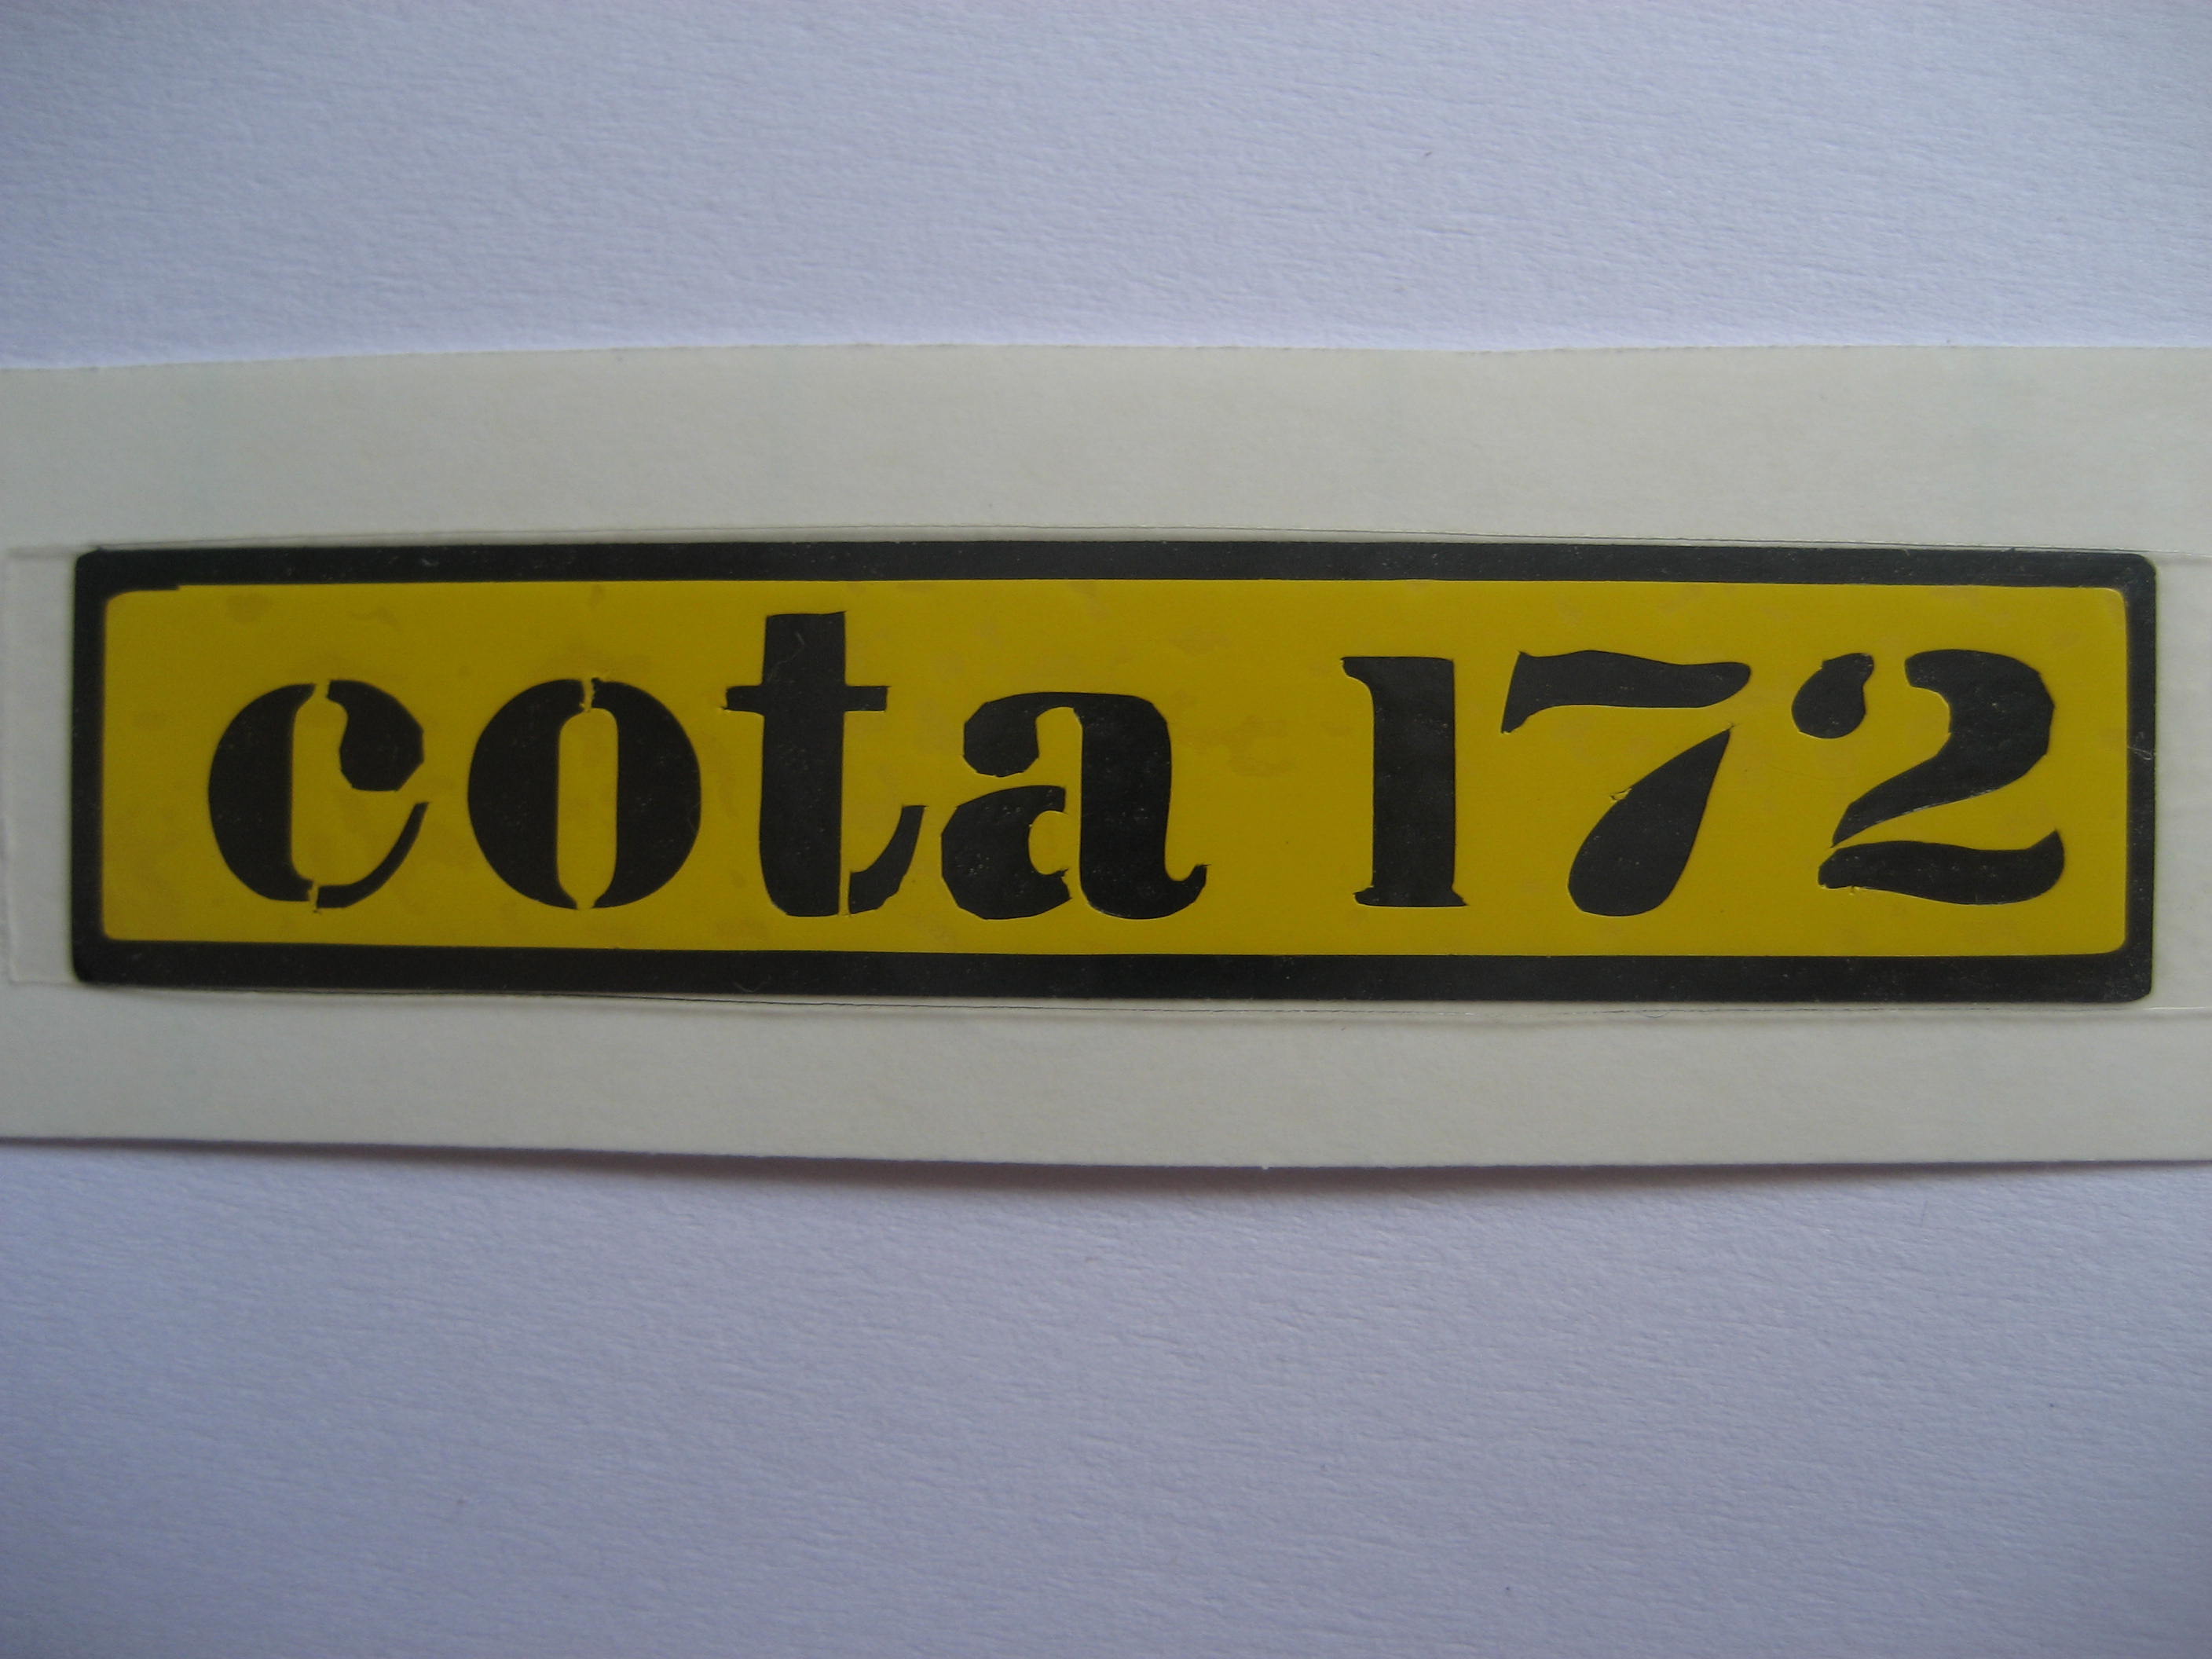 MO127B (leyenda Cota 172, texto negro sobre fondo amarillo)